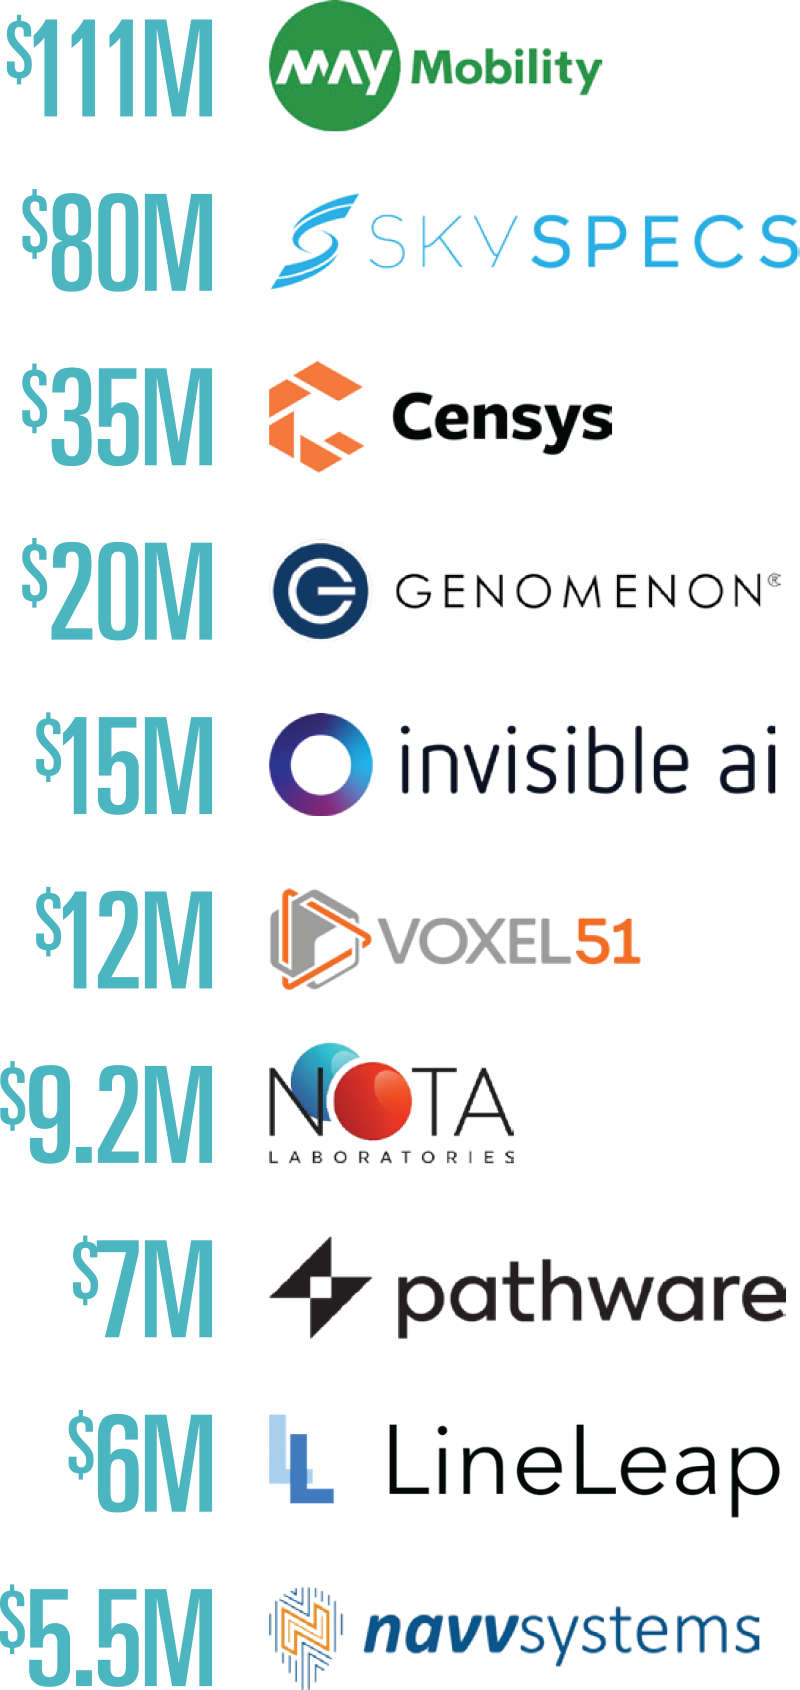 Entrepreneurial company logos and funding amounts raised